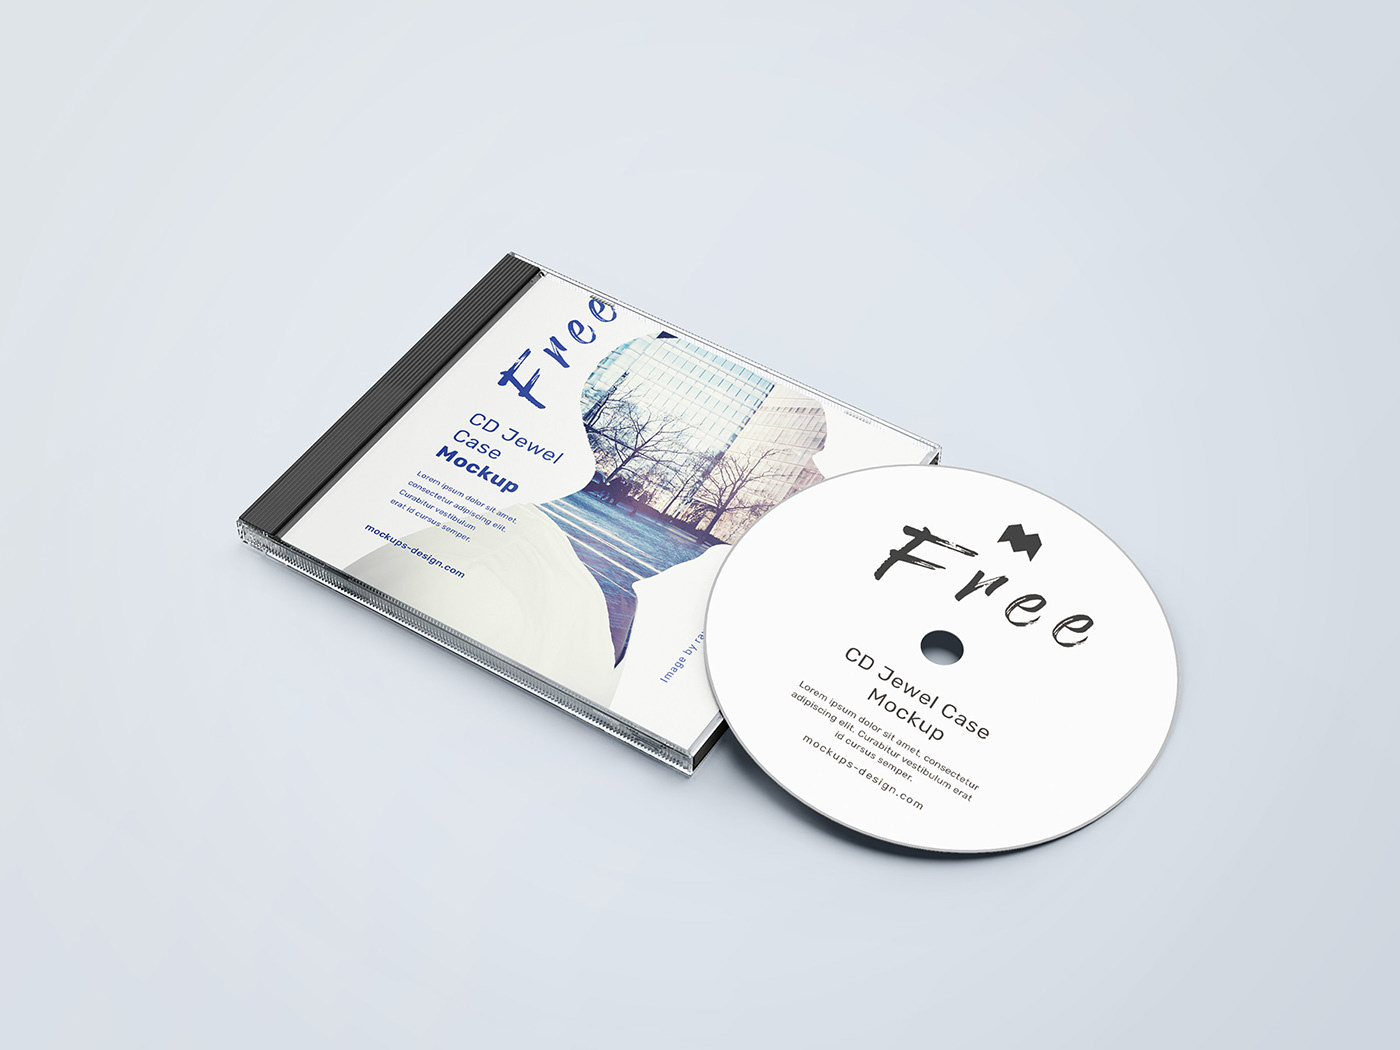 free cd DVD tray package Mockup freebie download